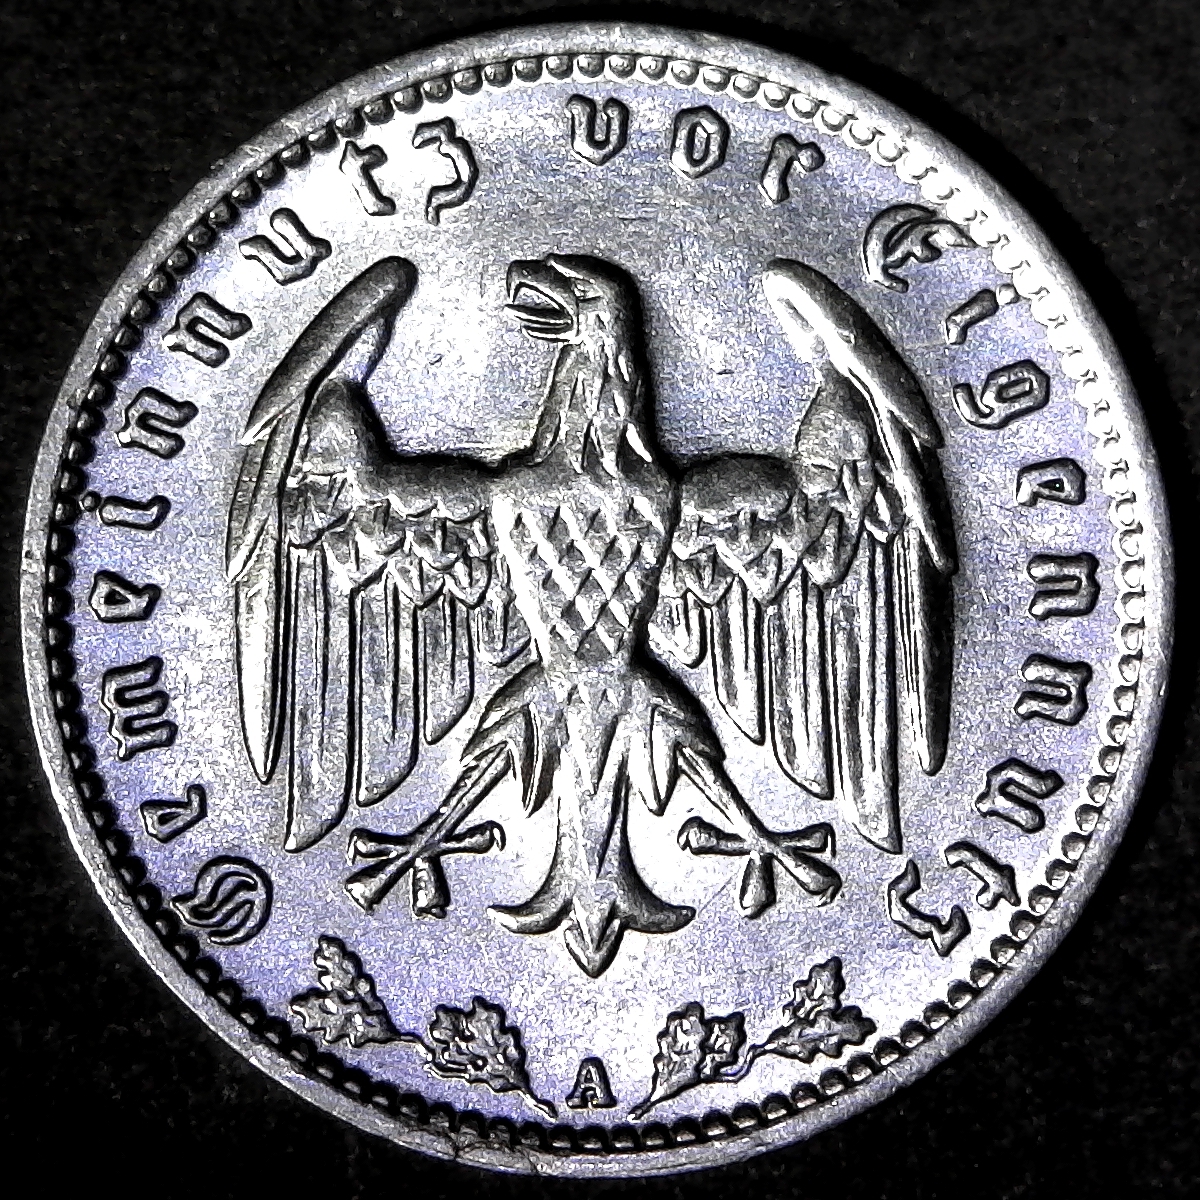 Germany 1 Reichsmark 1935 A rev.jpg